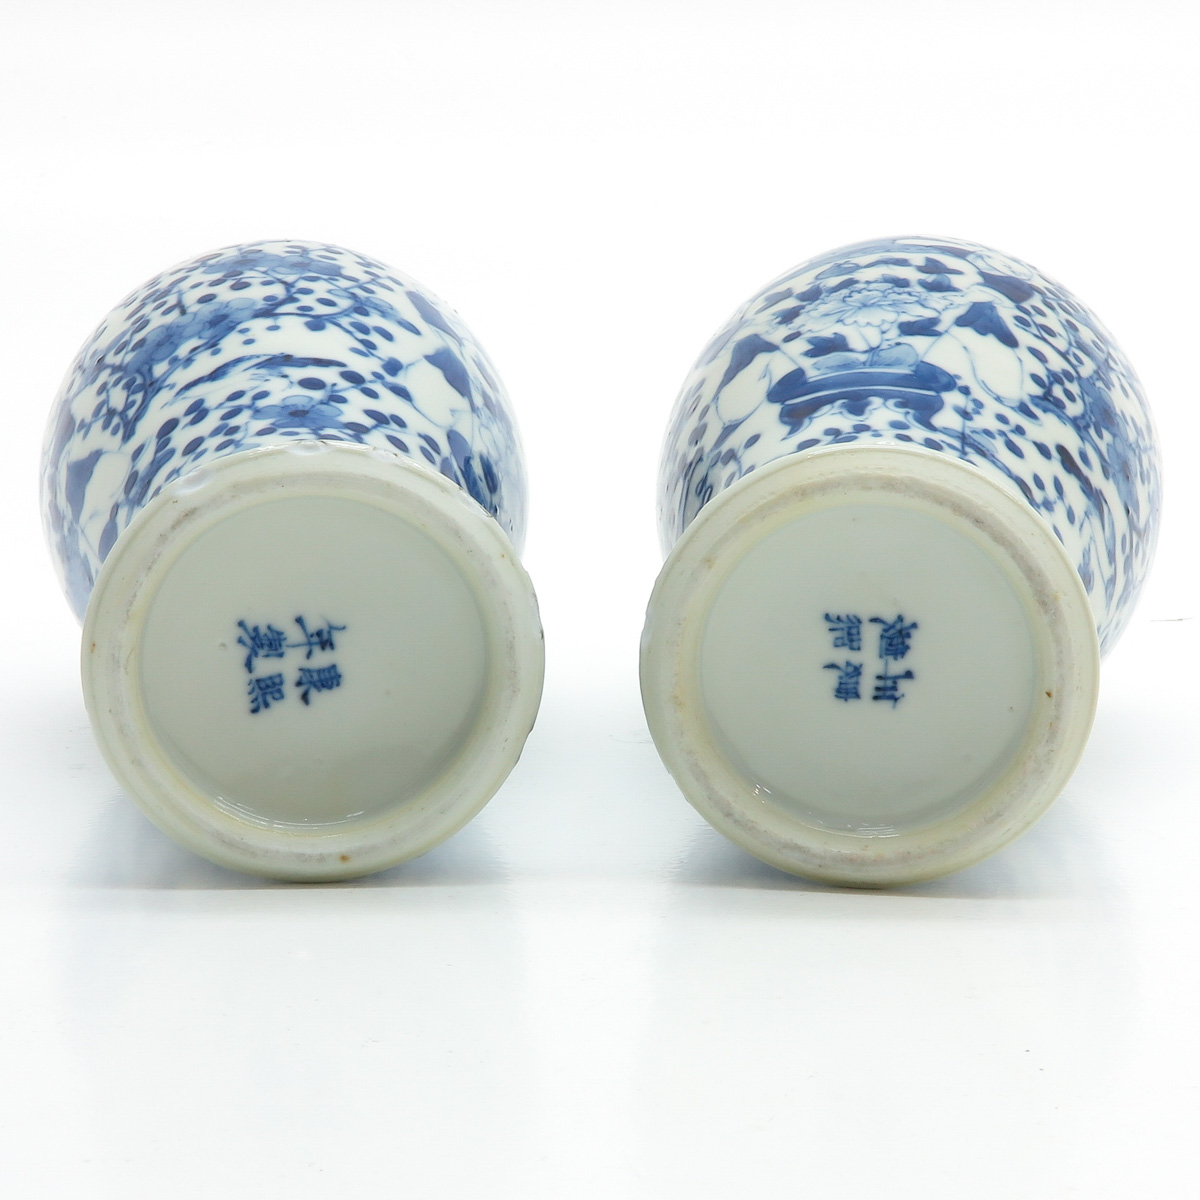 Lot of 2 China Porcelain Vases - Image 6 of 6